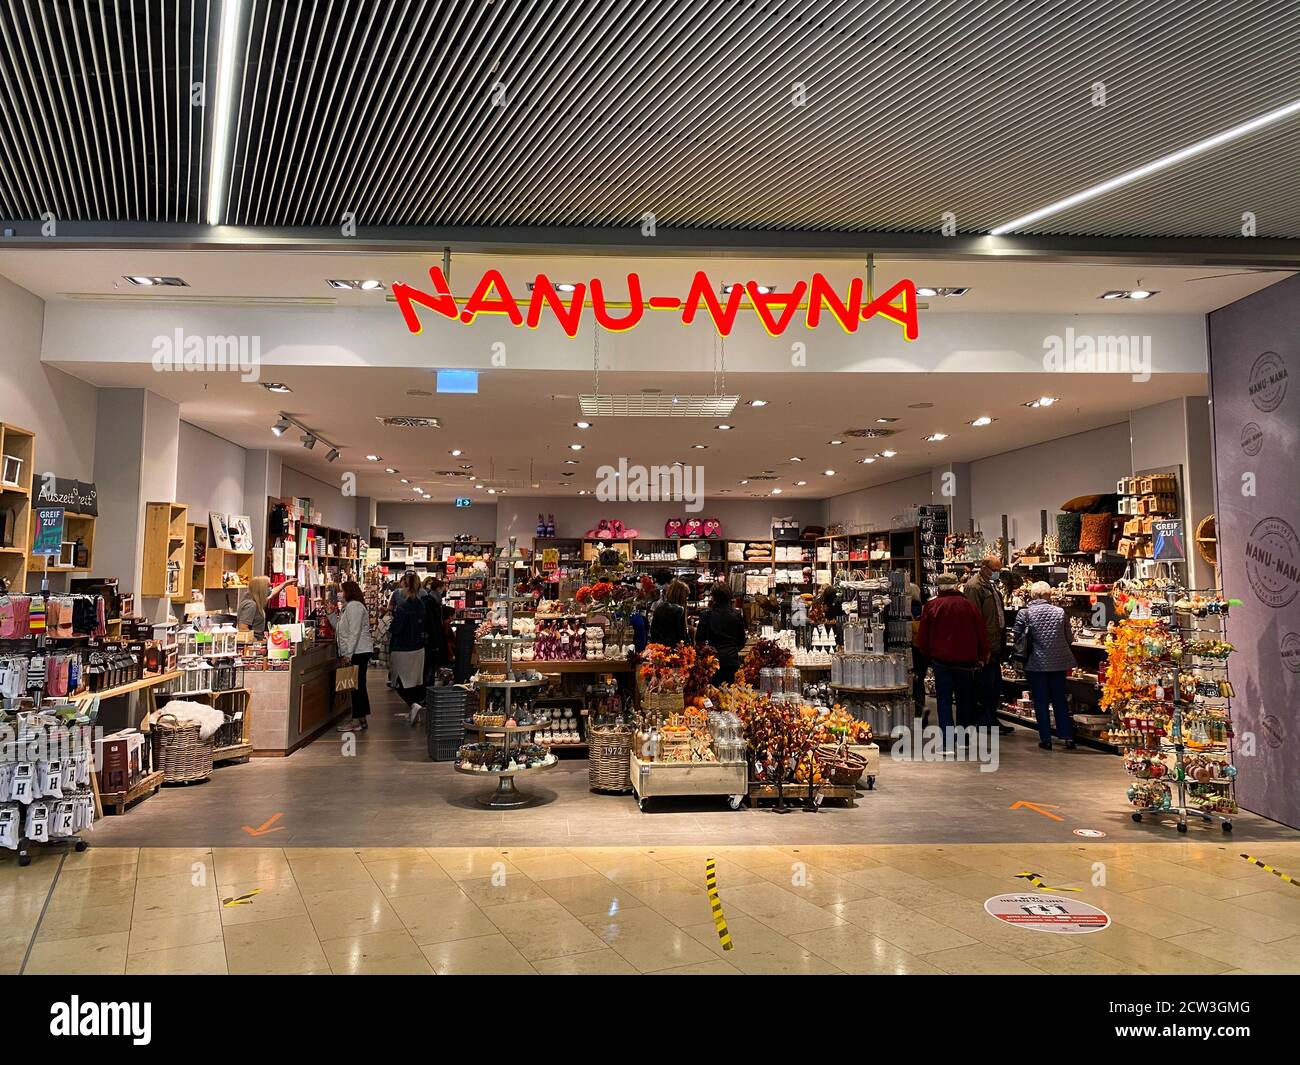 Nanu Nana High Resolution Stock Photography and Images - Alamy